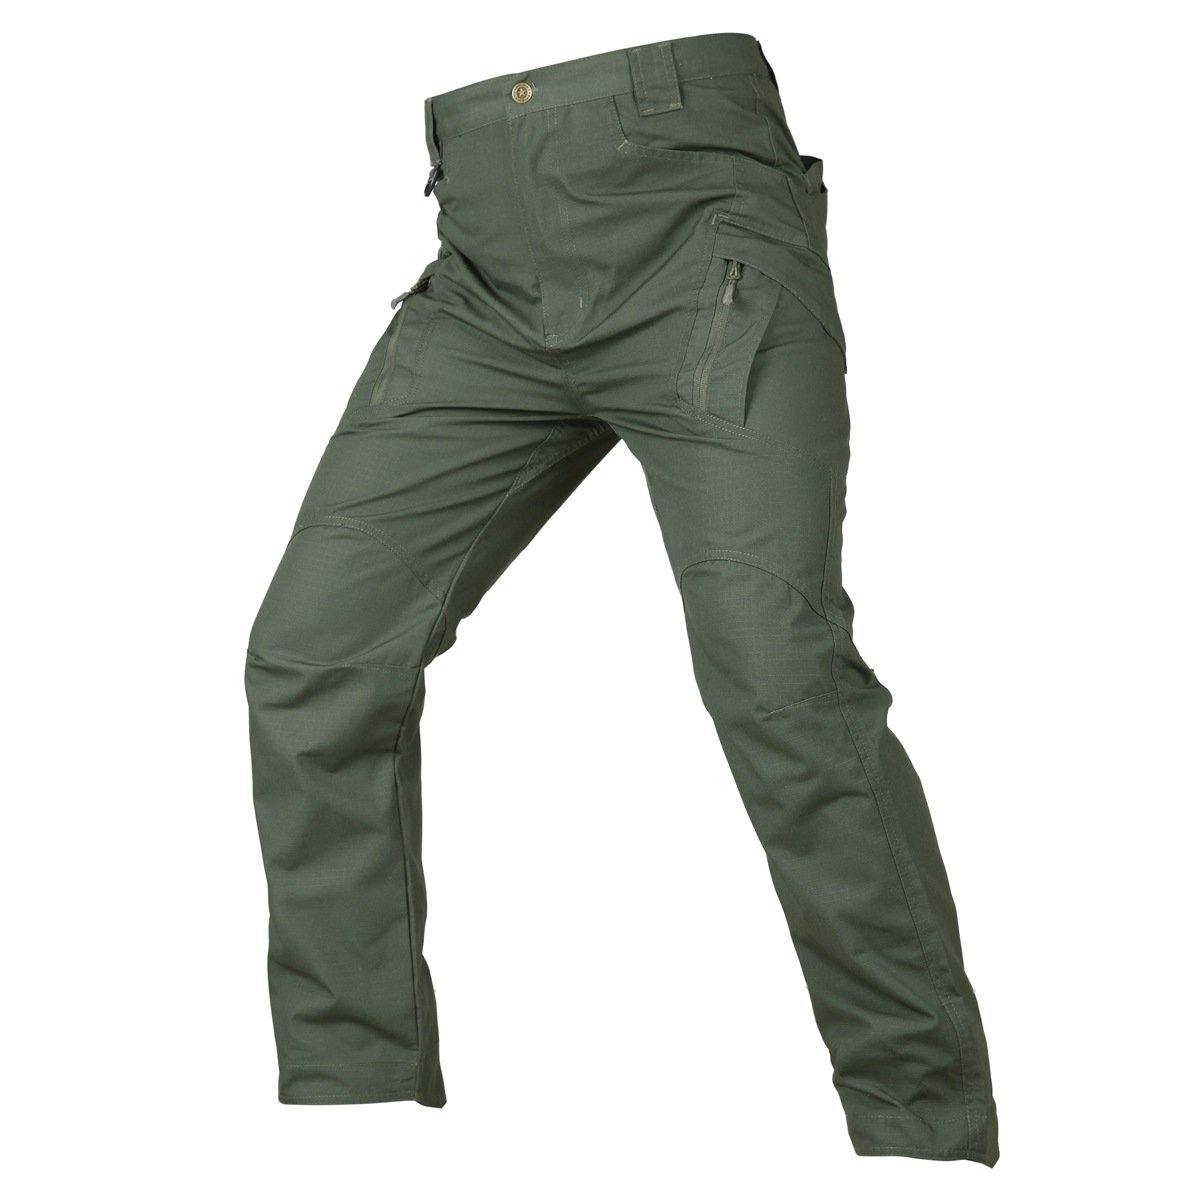 Pantalones tácticos para hombre IX9 outdoor - MXbueno